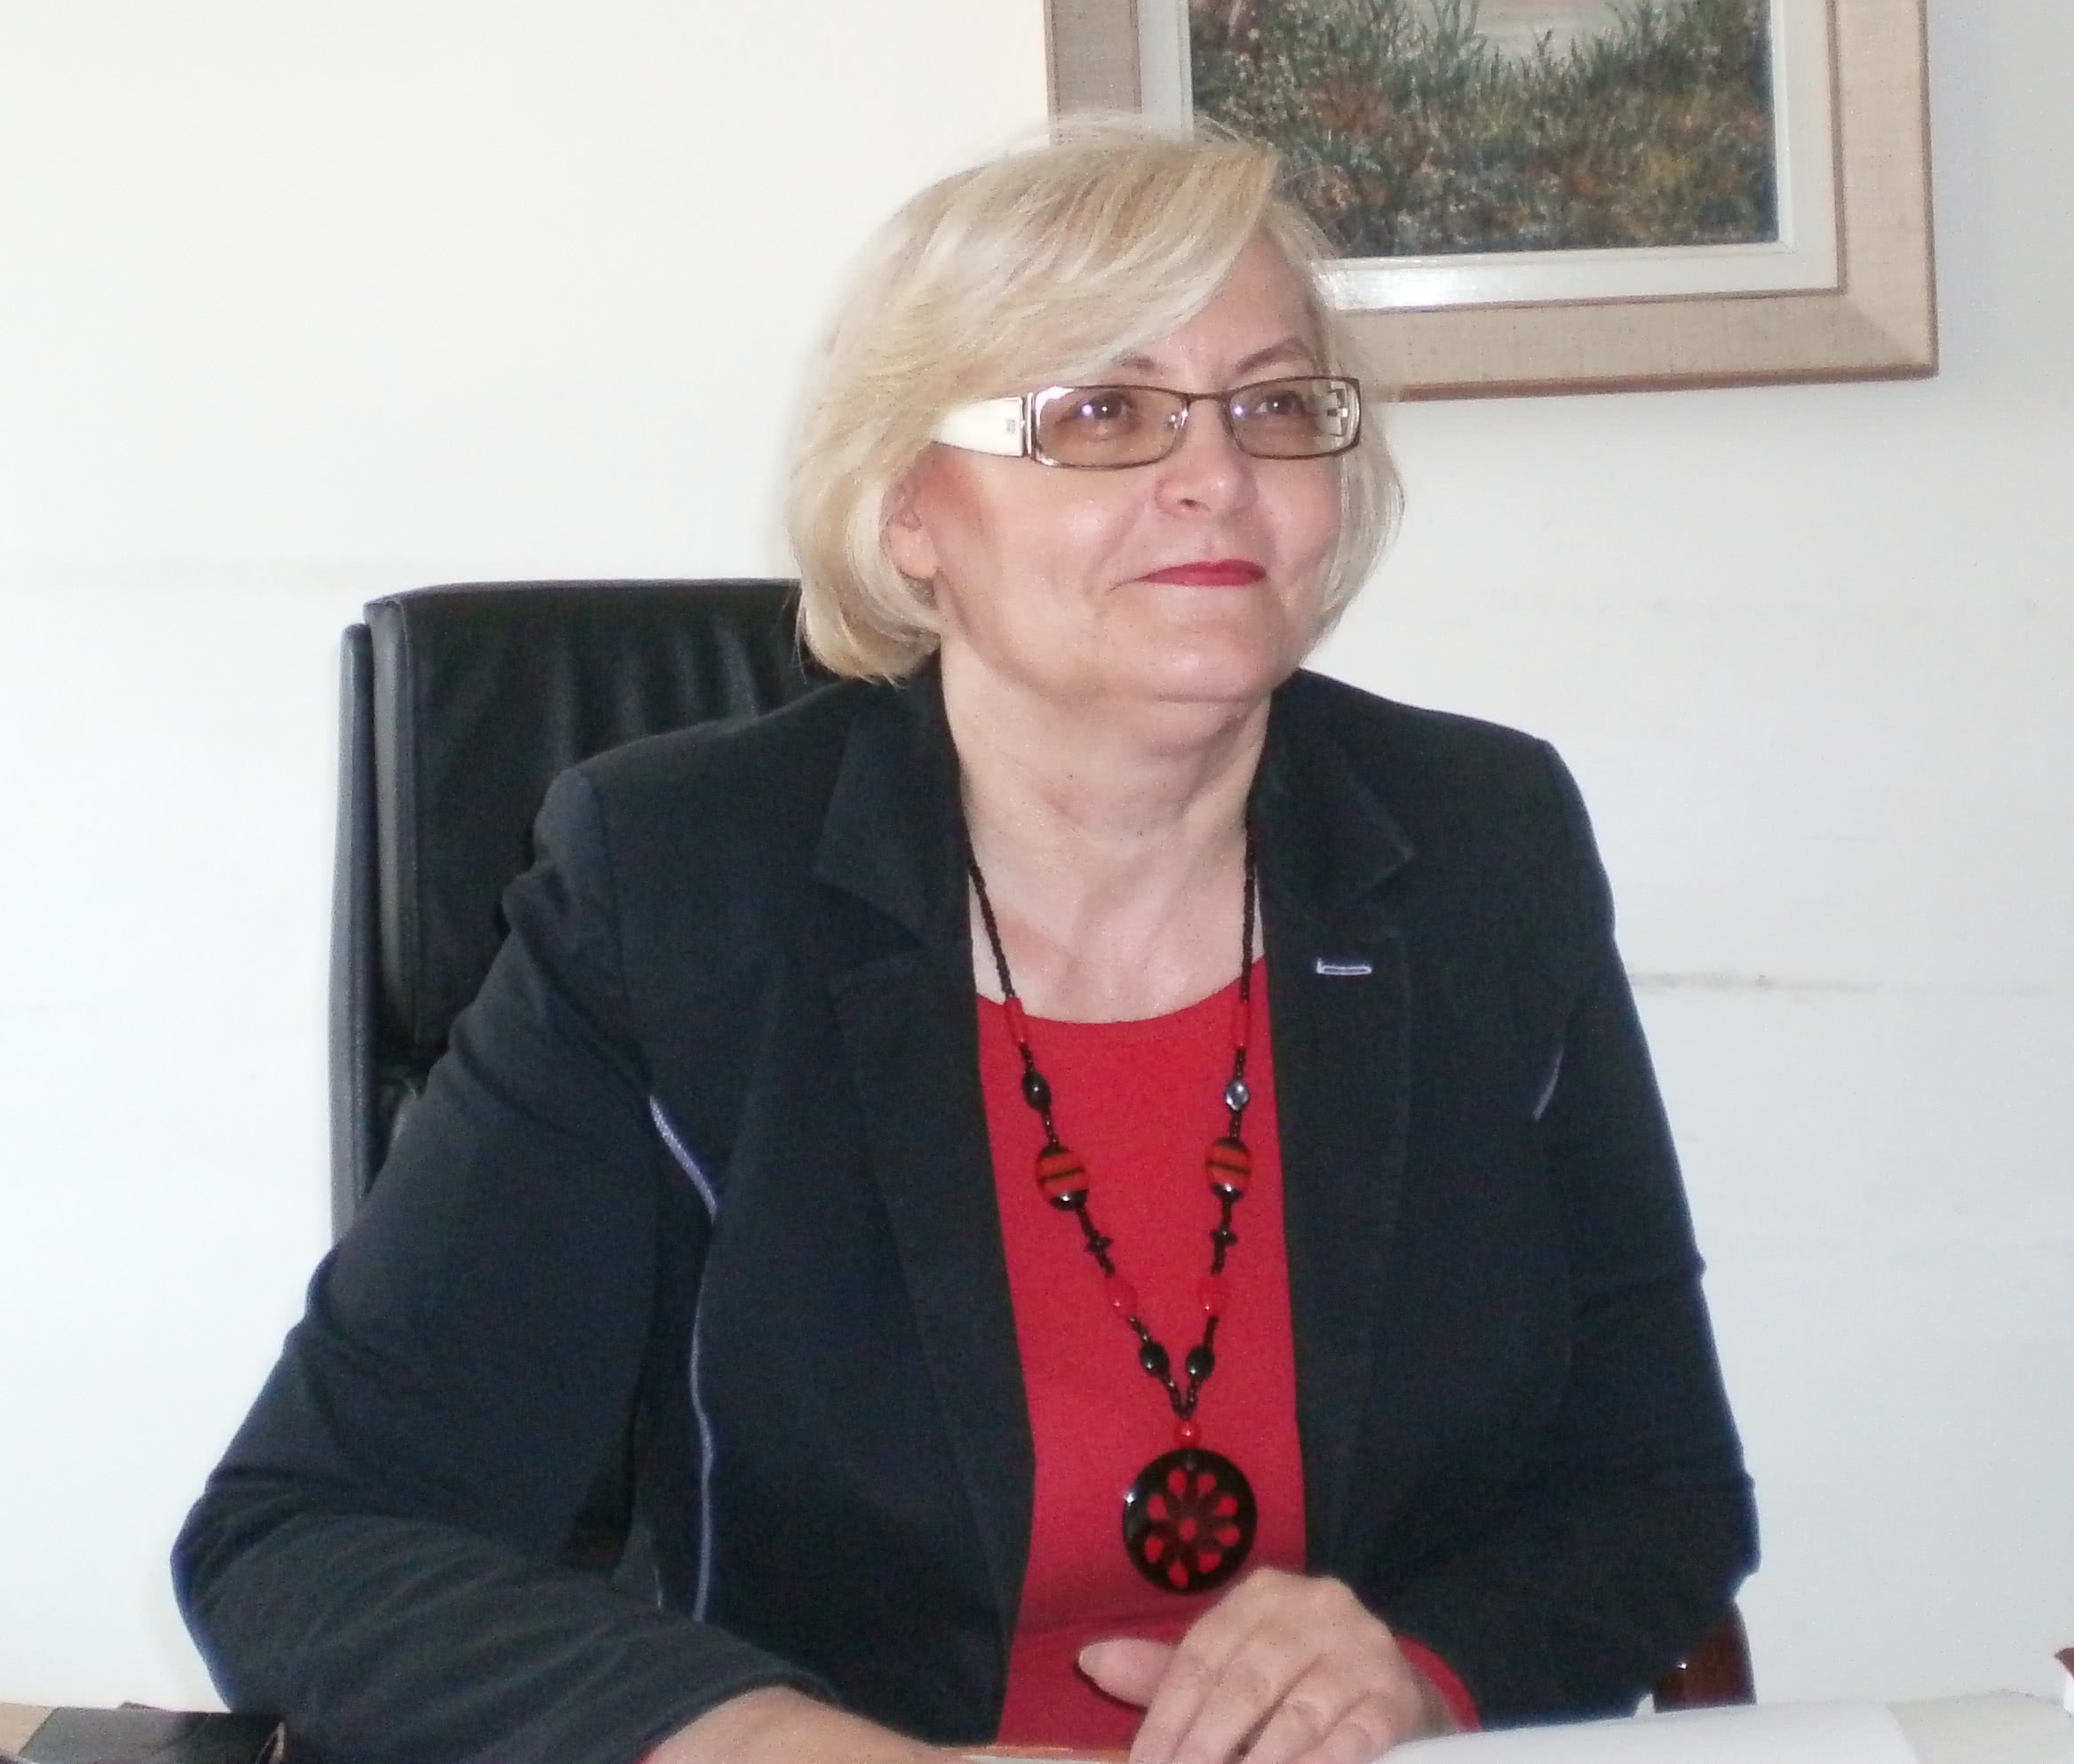 judecator AXINTE LĂCRĂMIOARA, candidat CSM 2016